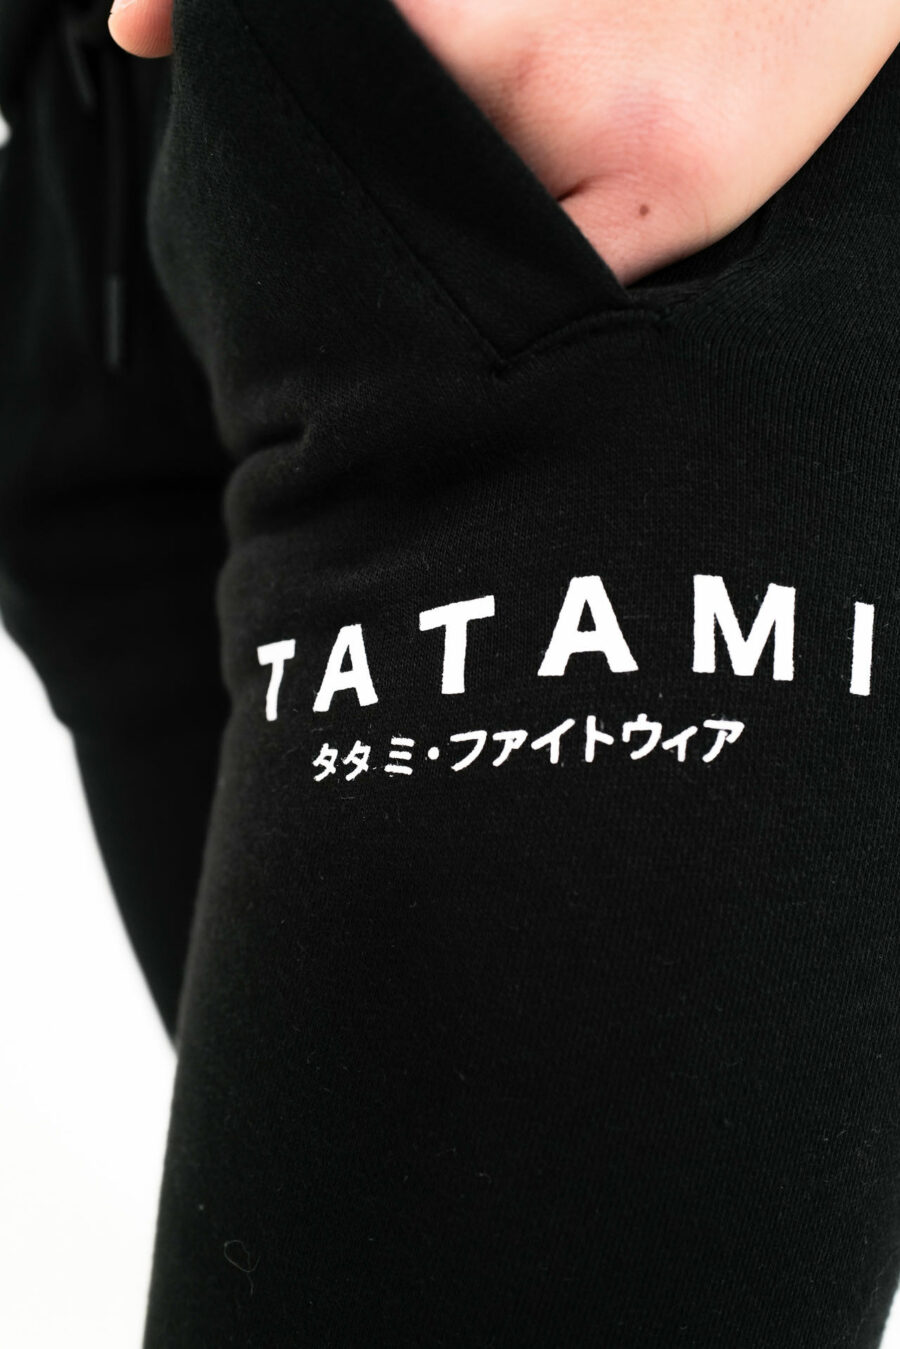 tatami katakana jogginghose bjj jiu jitsu details fengbao